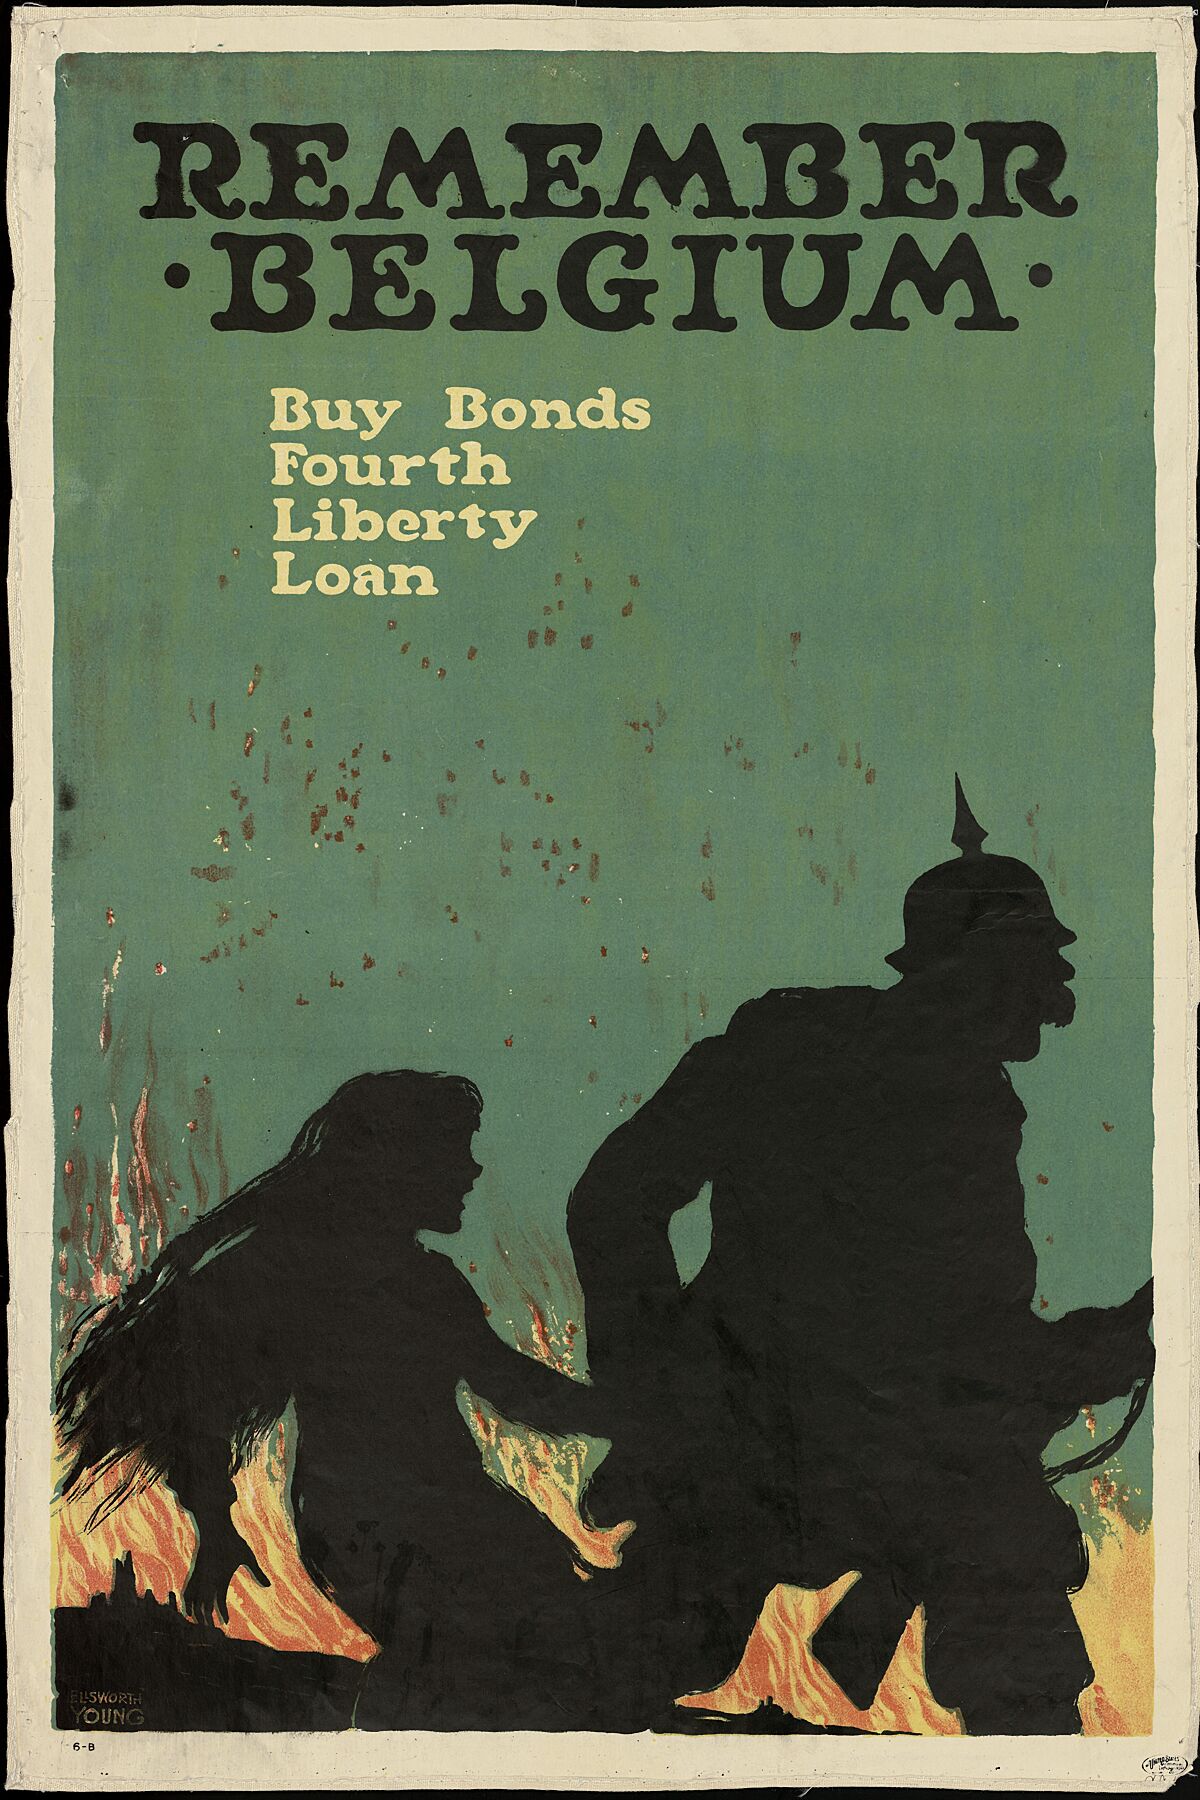 Remember Belgium. Buy Bonds by Ellsworth Young - 1918